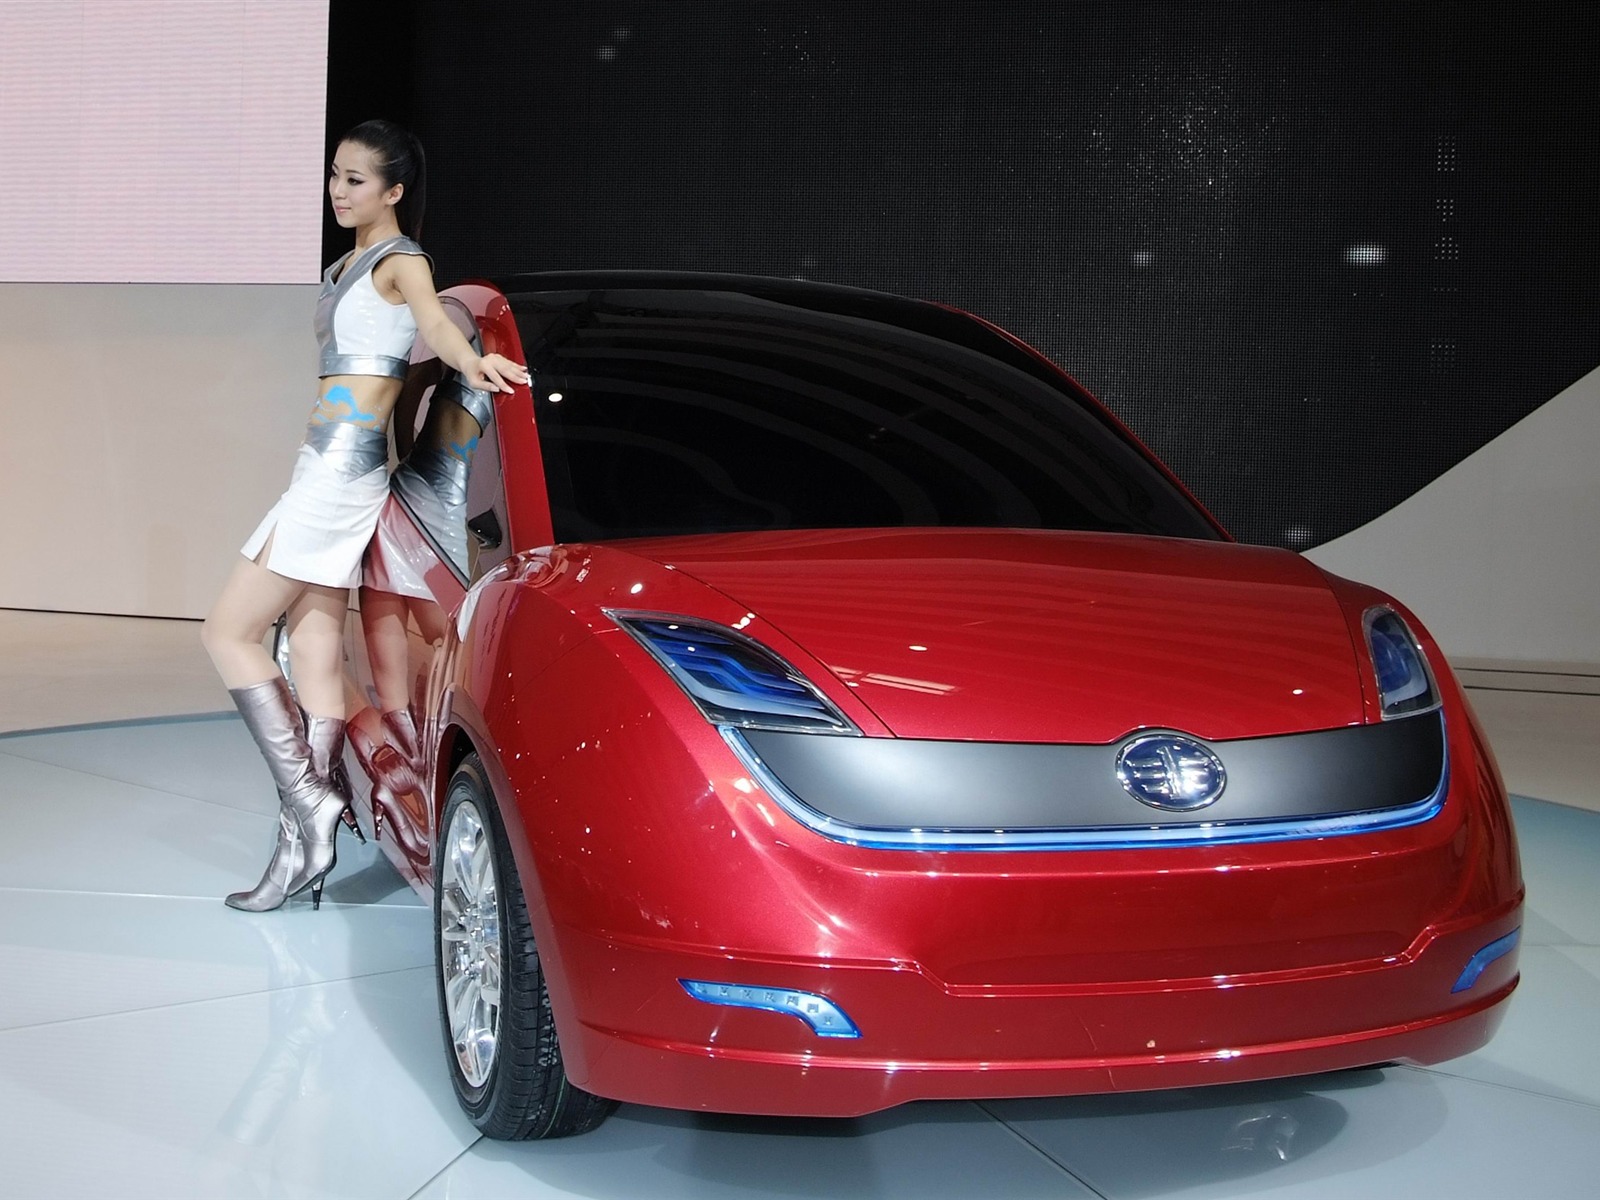 2010 Beijing International Auto Show Heung Che beauty (rebar works) #24 - 1600x1200